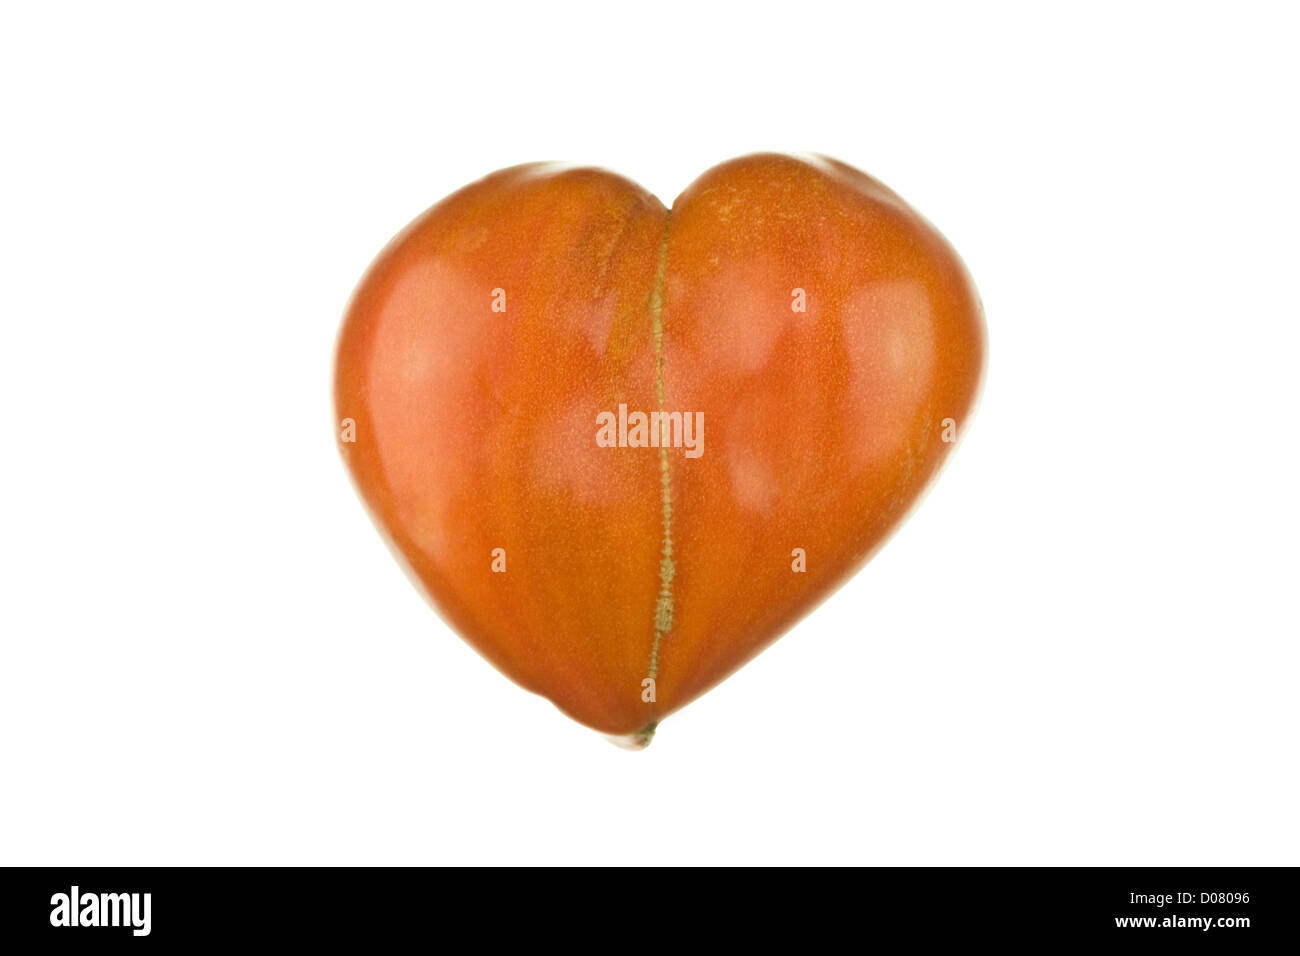 heart-shaped tomato on pure white background Stock Photo